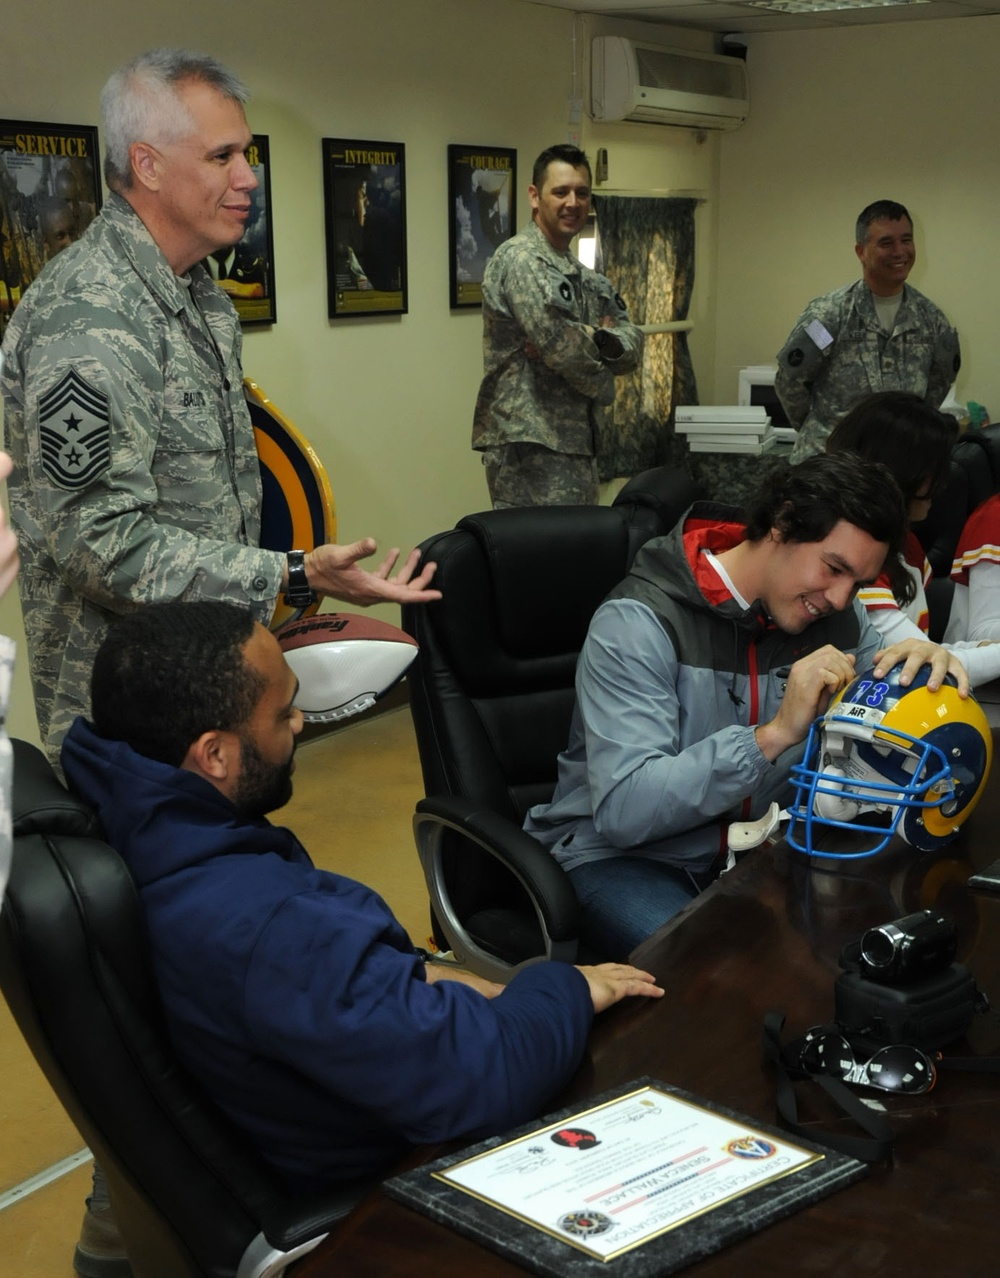 NFL players visit troops